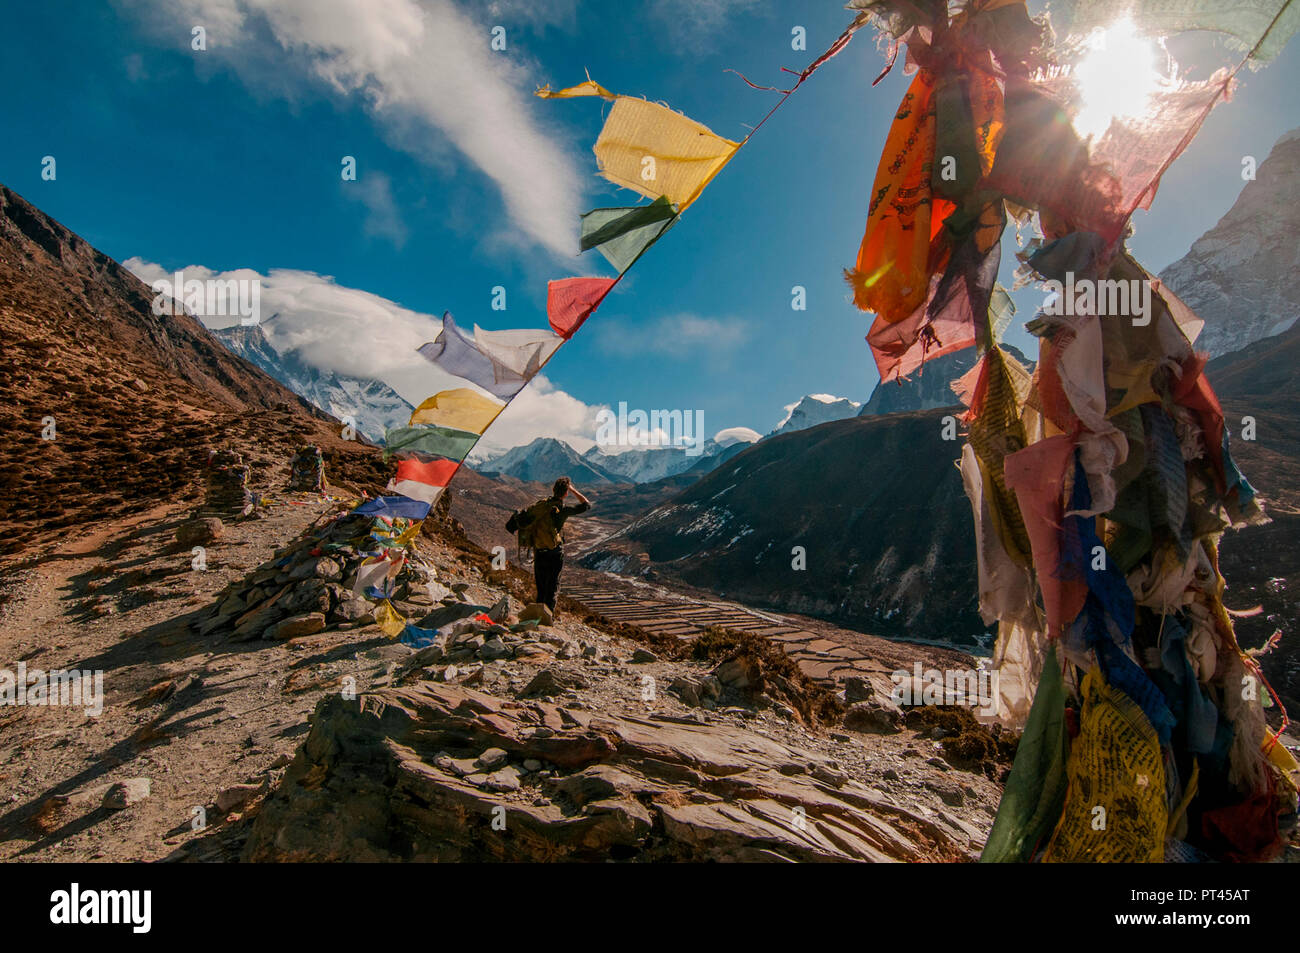 Asia, Nepal, Himalaya region, Ama Dablam, Khumbu Himal, Sagarmatha National Park, Everest Base Camp Trekking, Stock Photo